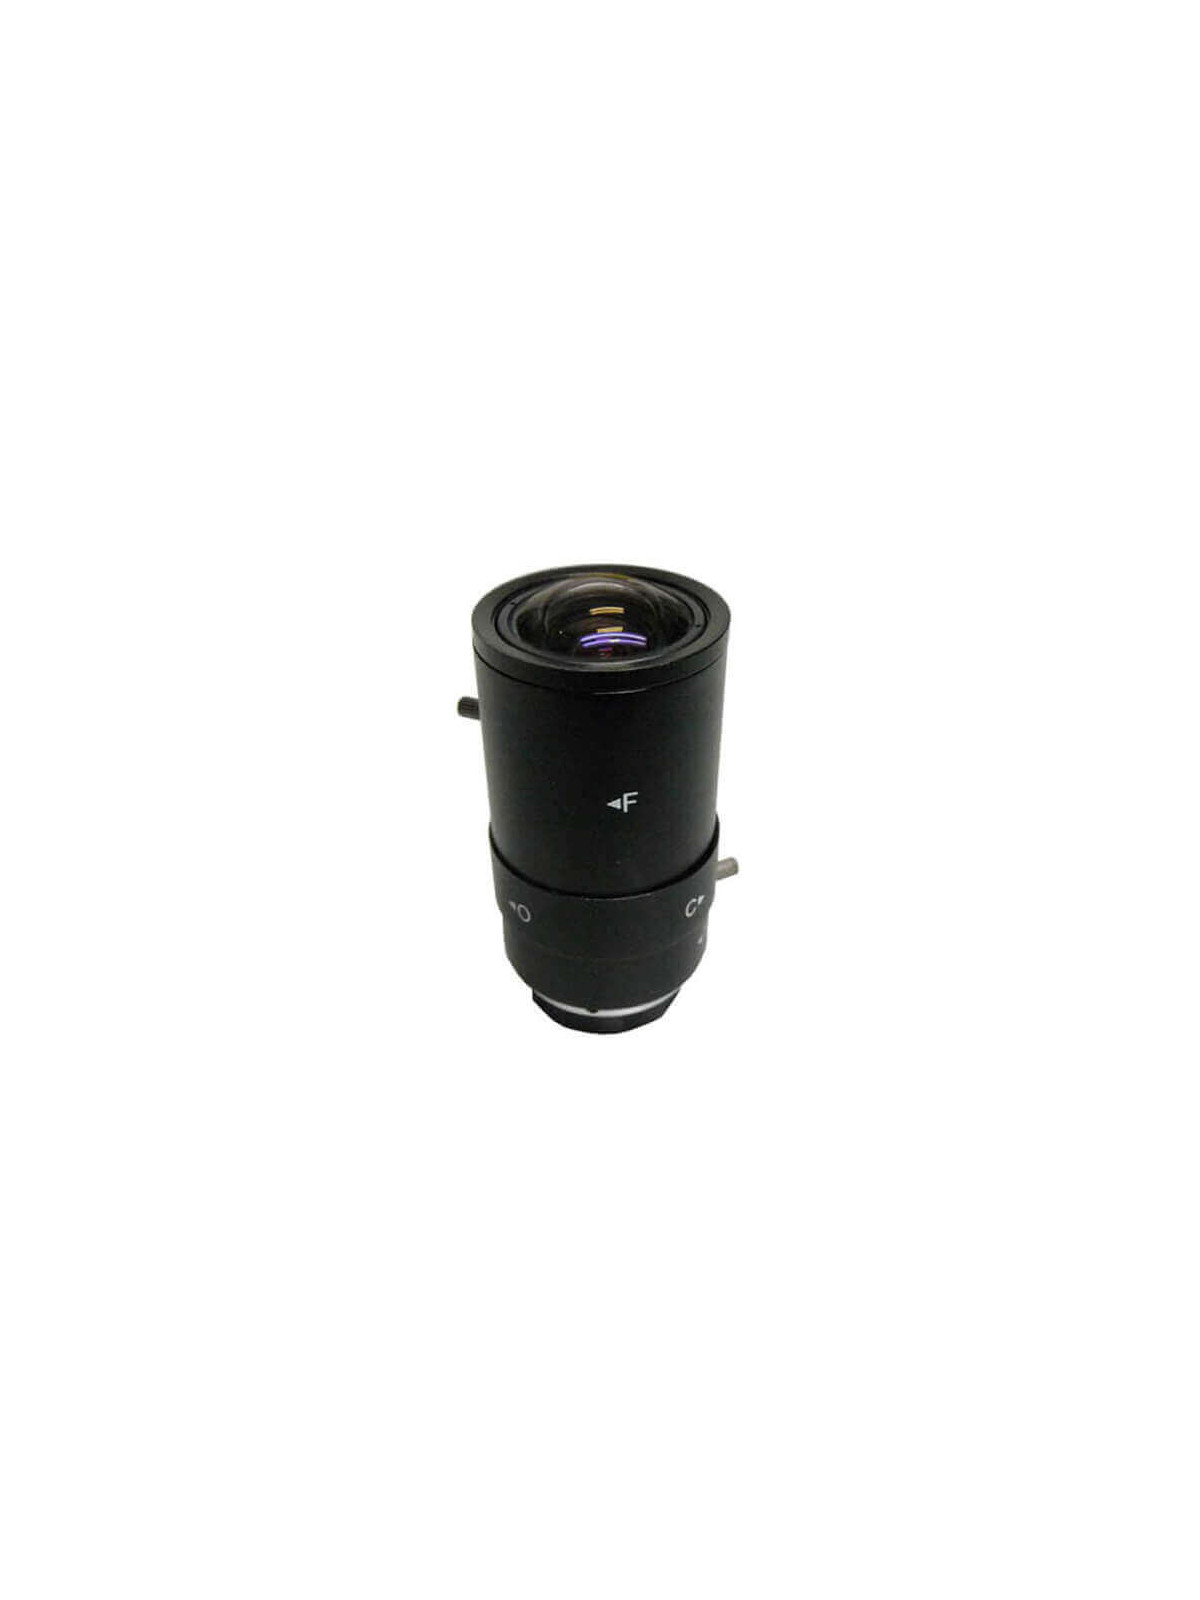 Óptica varifocal manual iris para cámara 2.8 - 12mm SSV2812